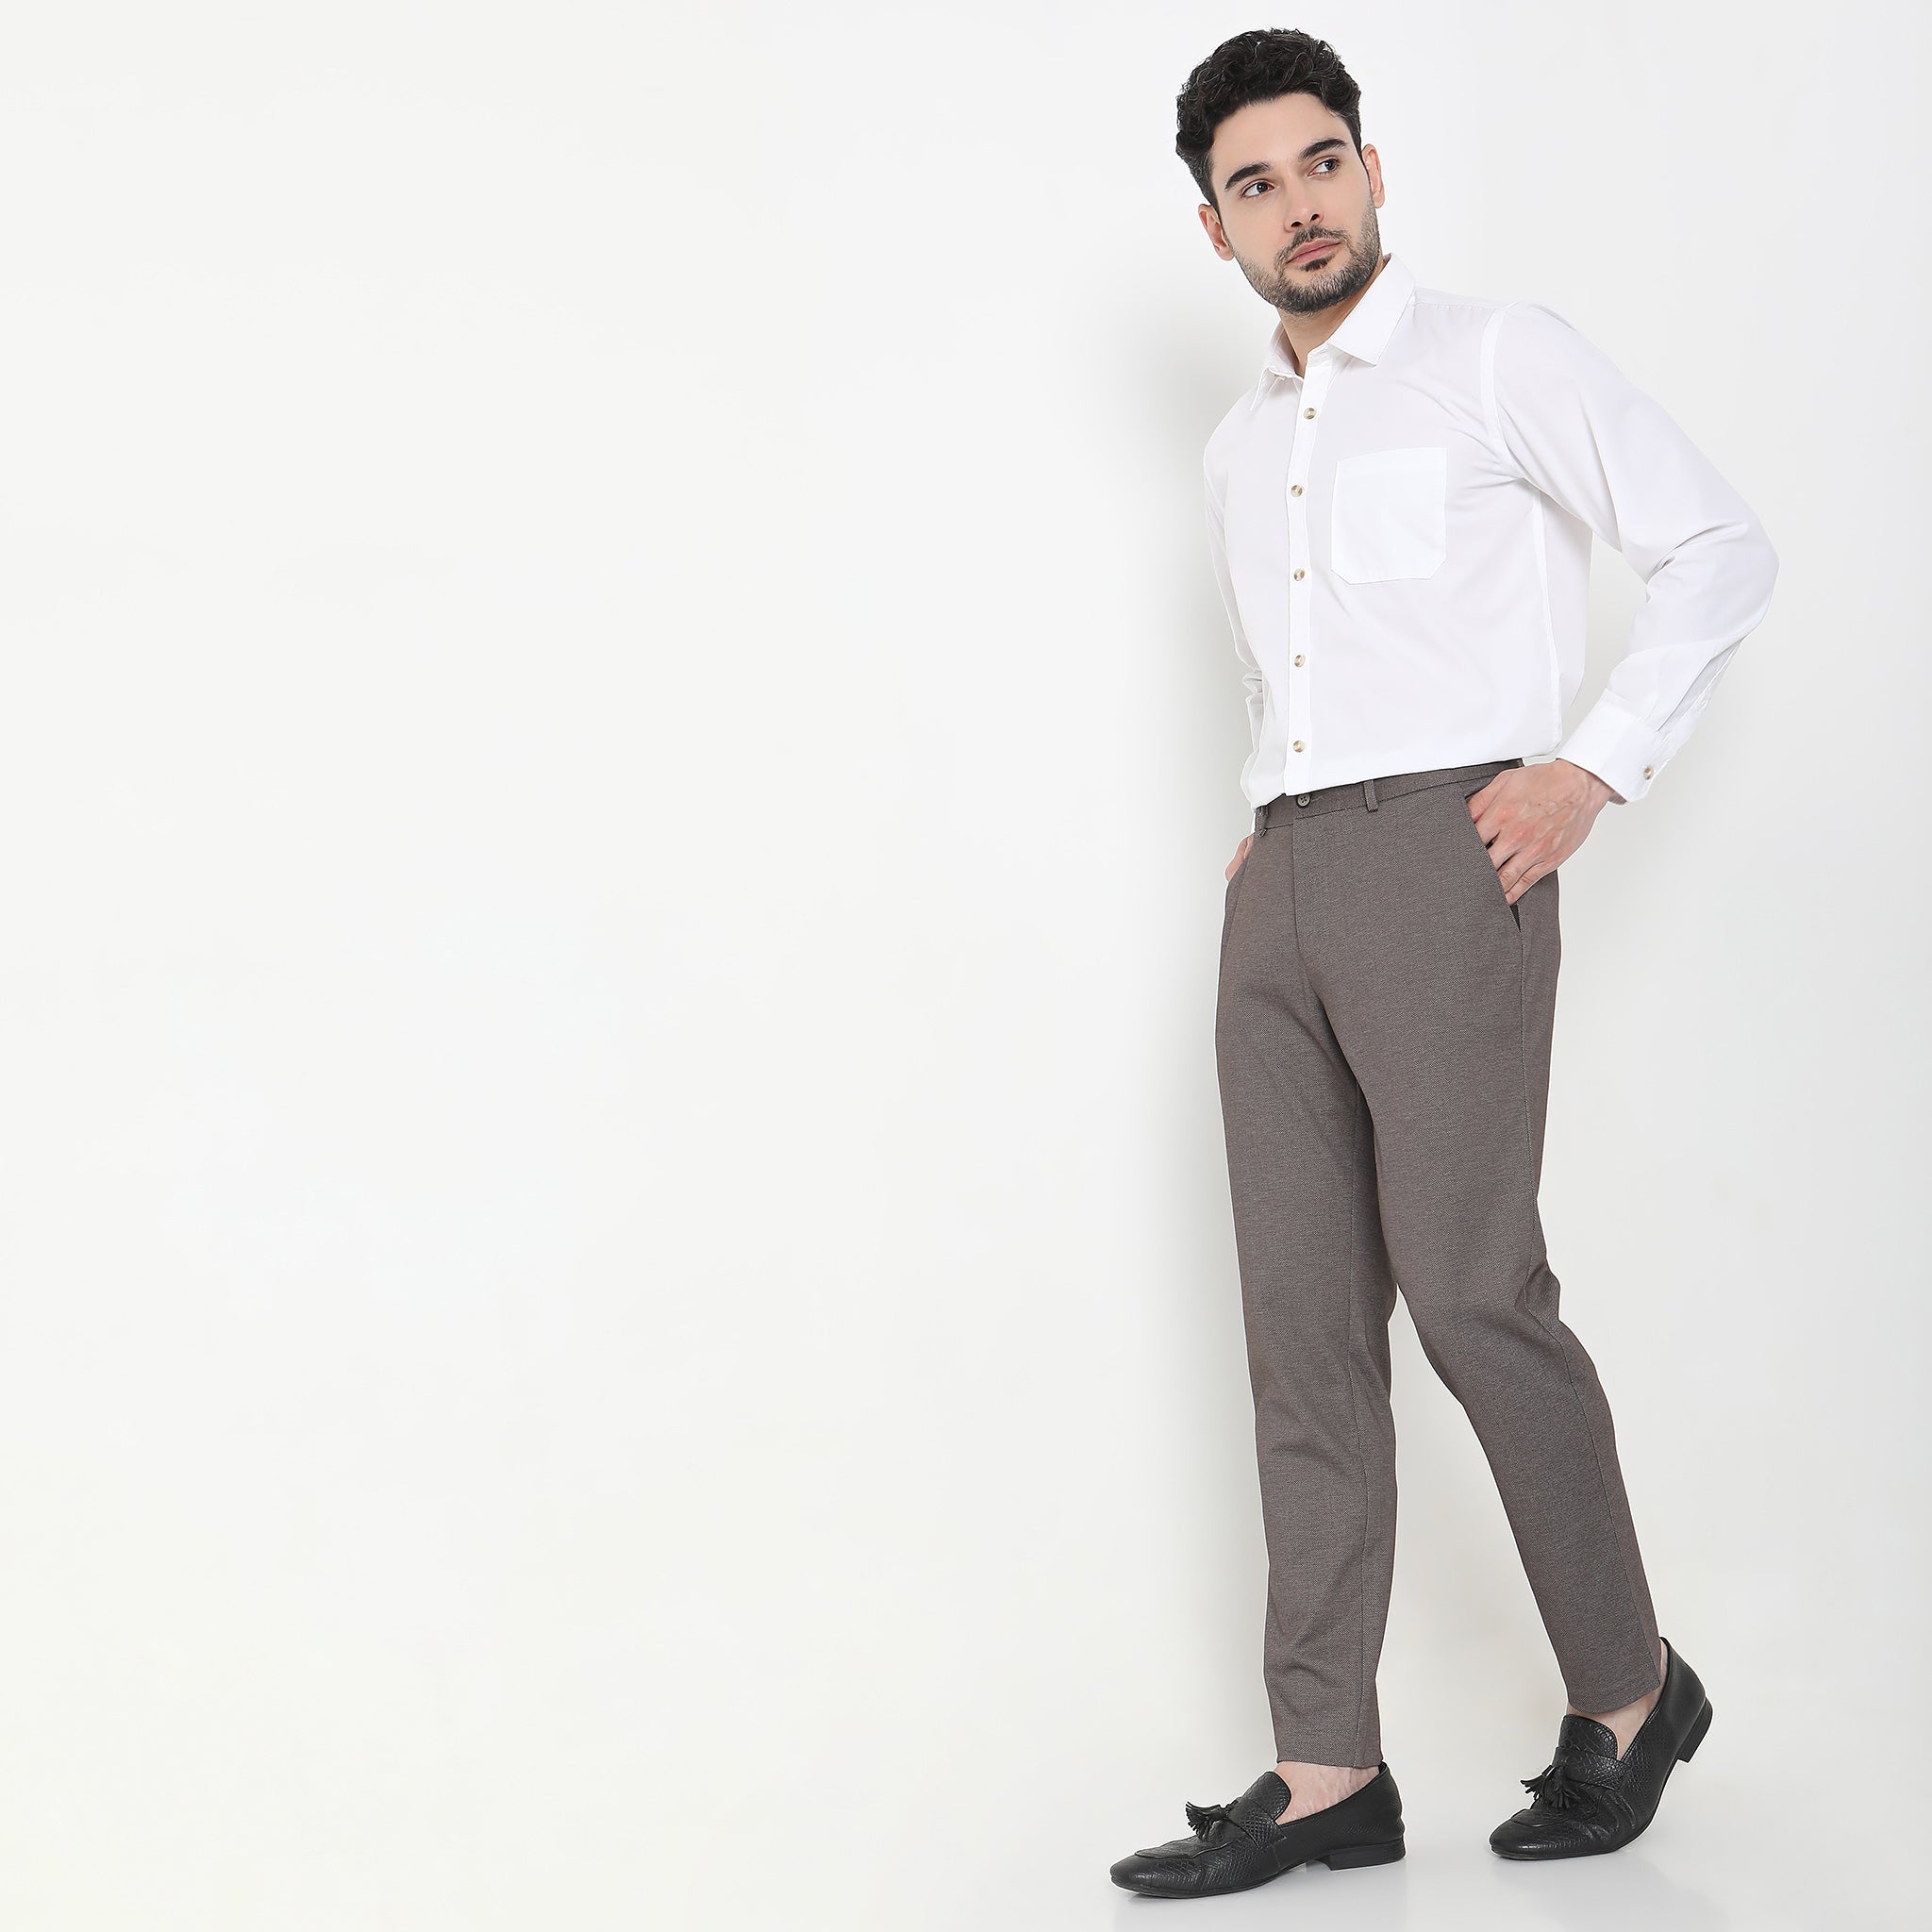 Men's Latest Hot Trends: Patterned Pants – OnPointFresh